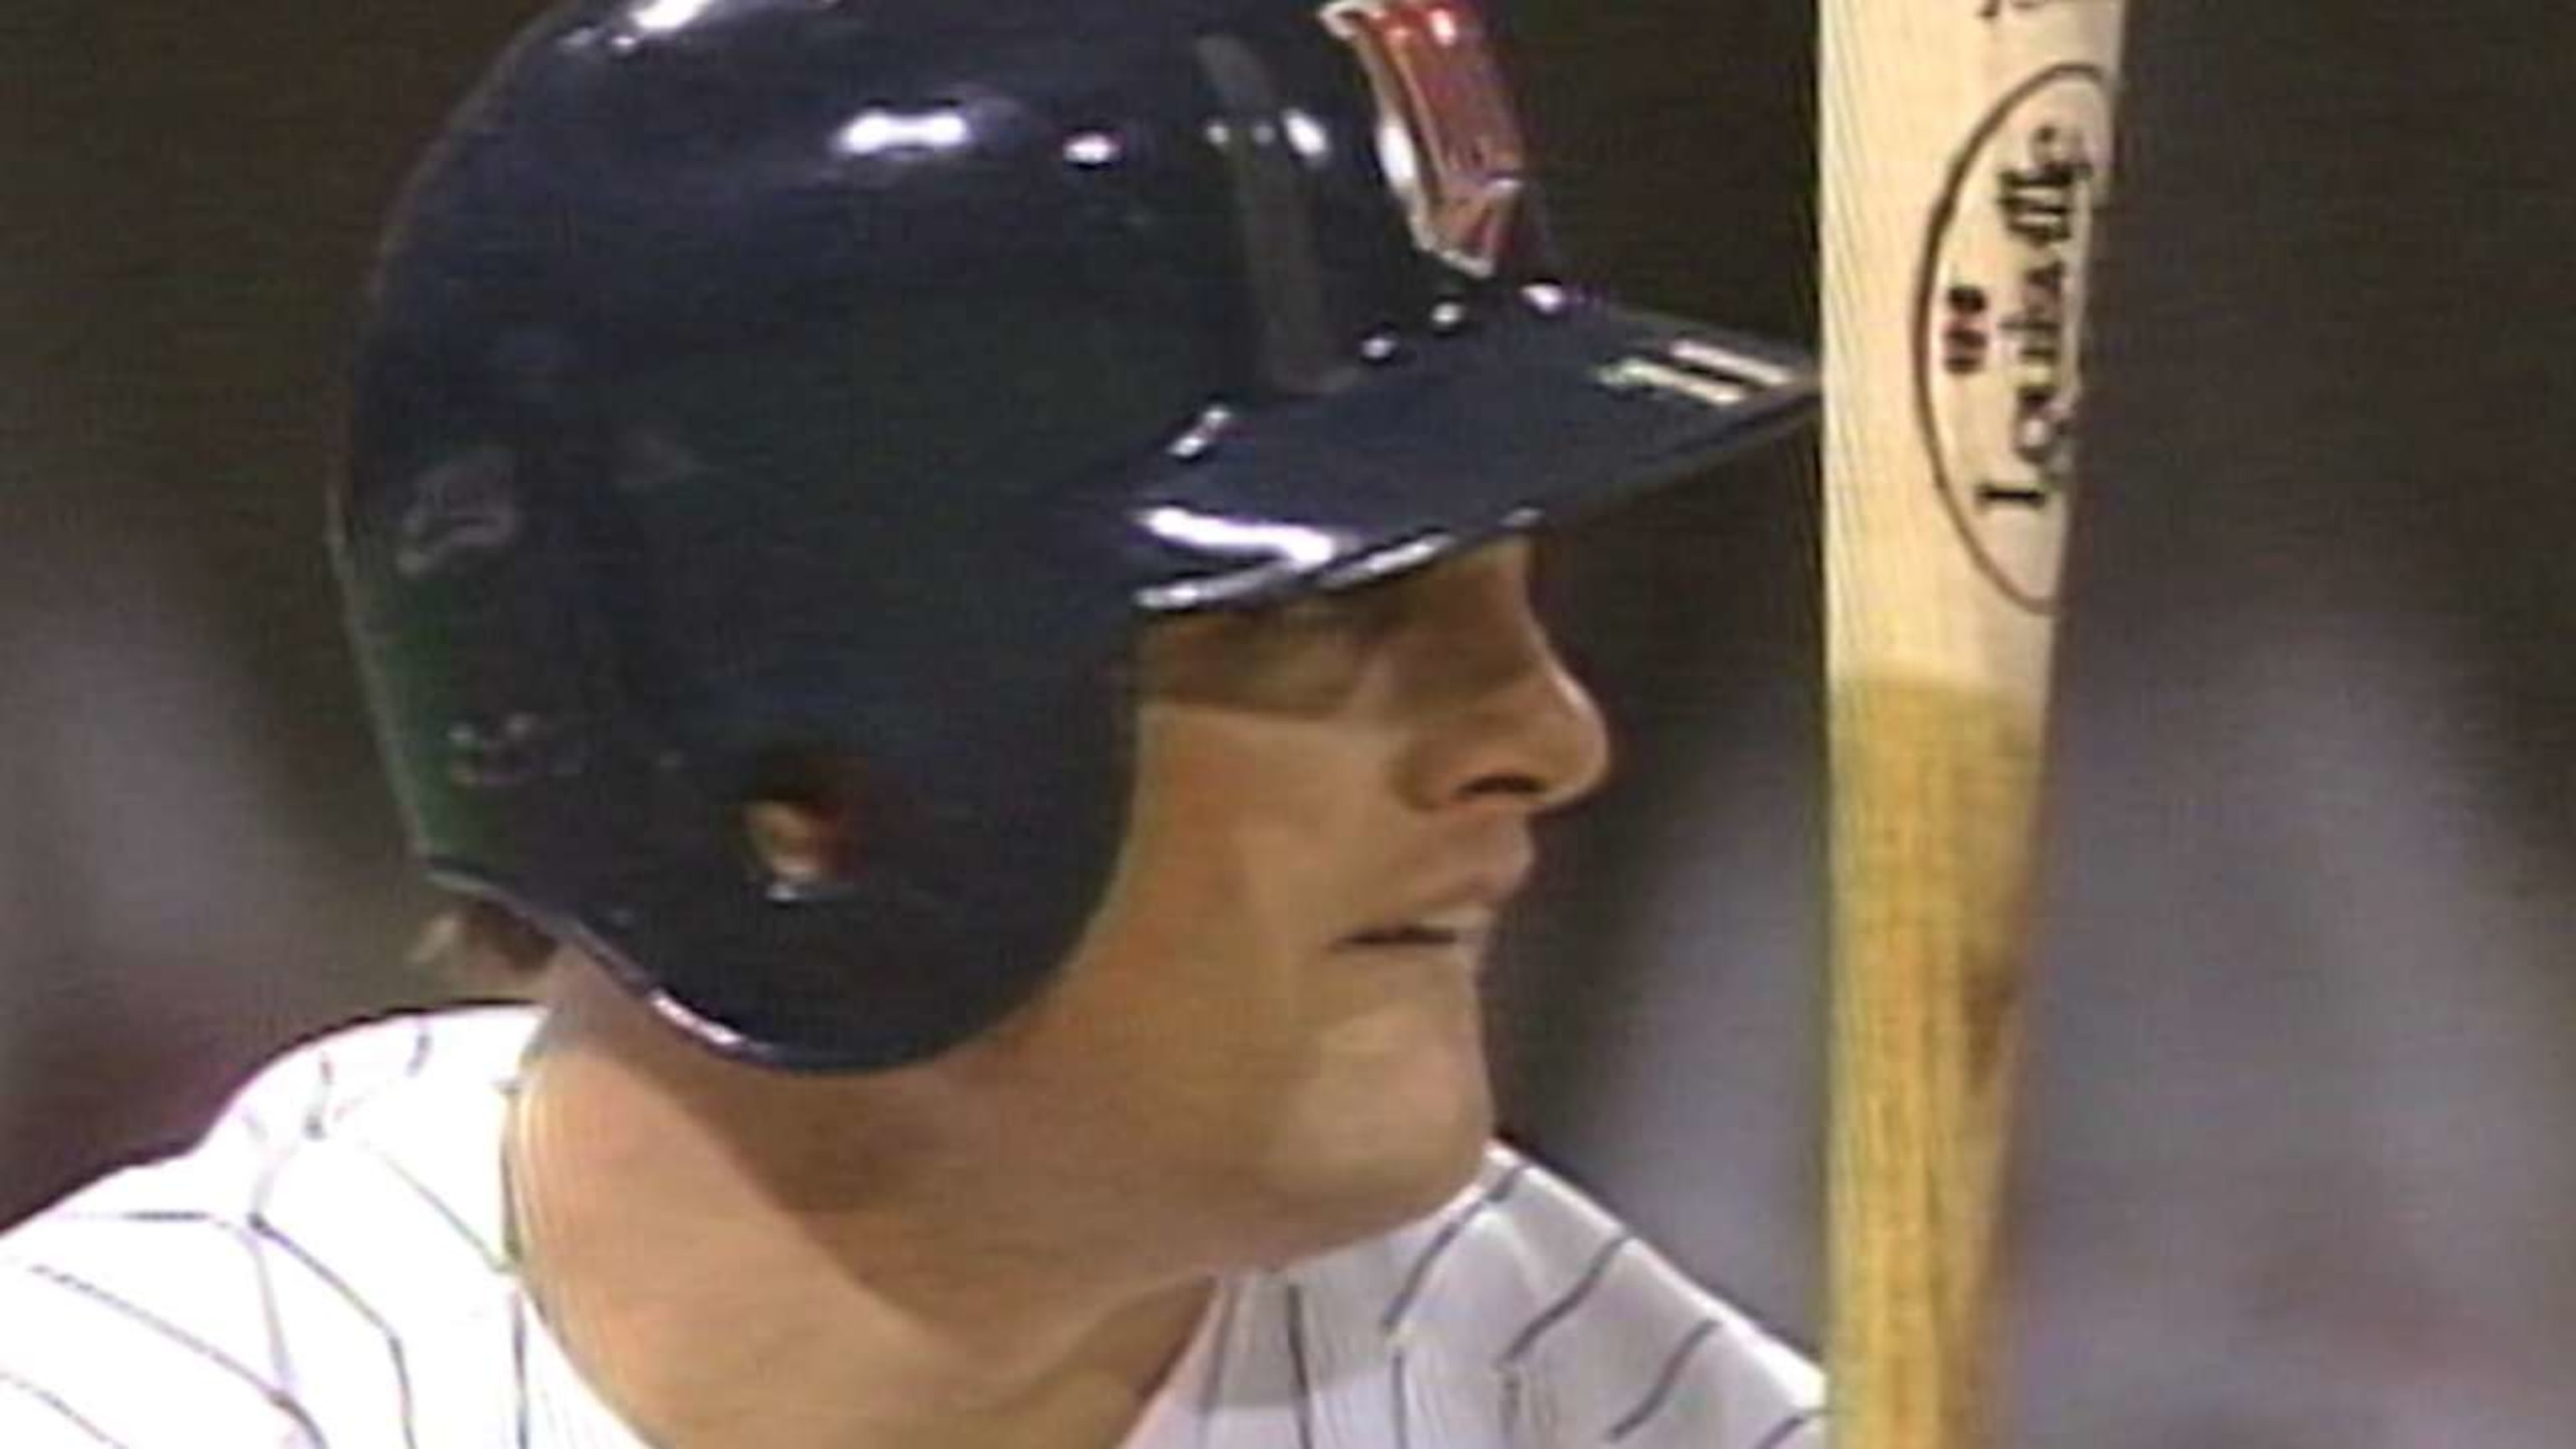 TIL John Olerud wears a batting helmet in the field. : r/MLBTheShow